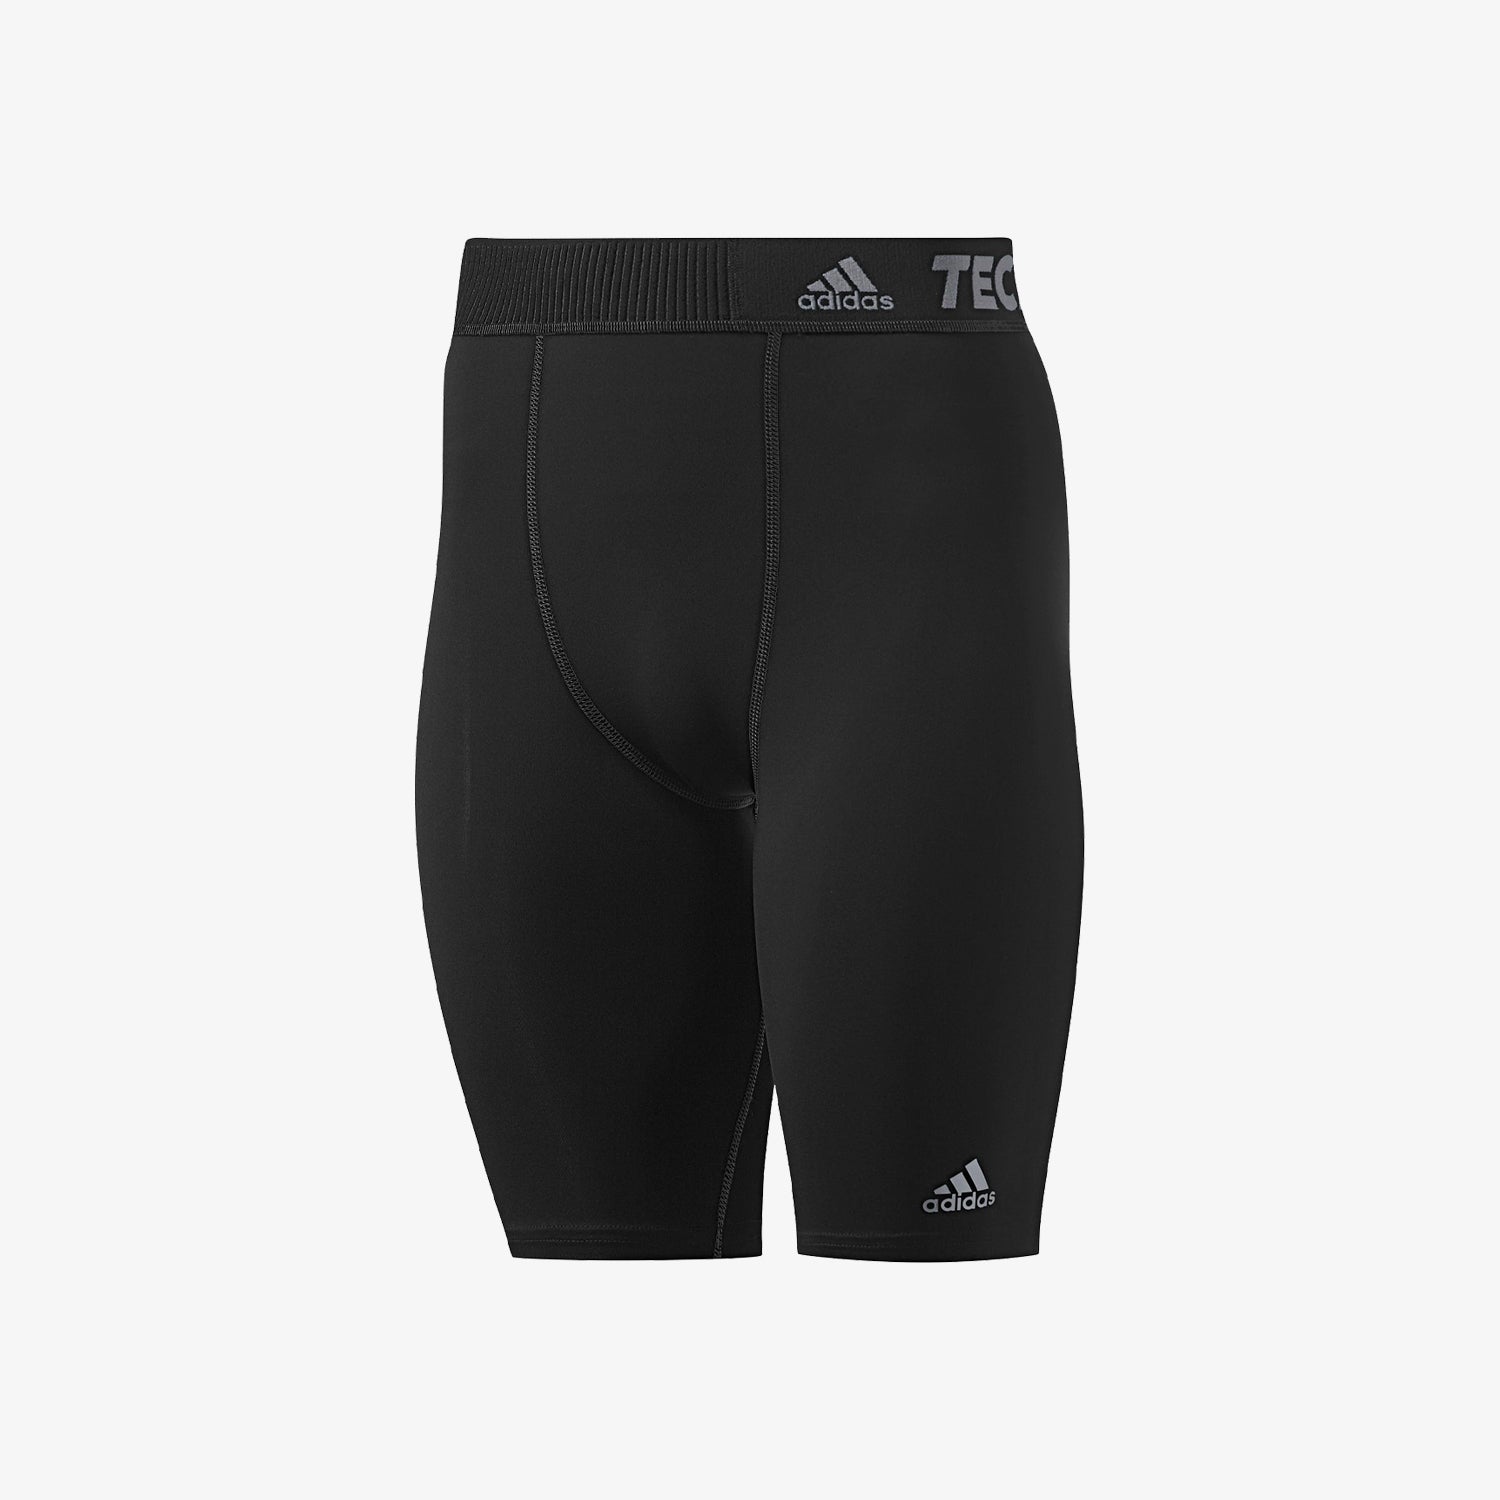 BASE Men's Core Compression Shorts - Black – BASE Compression